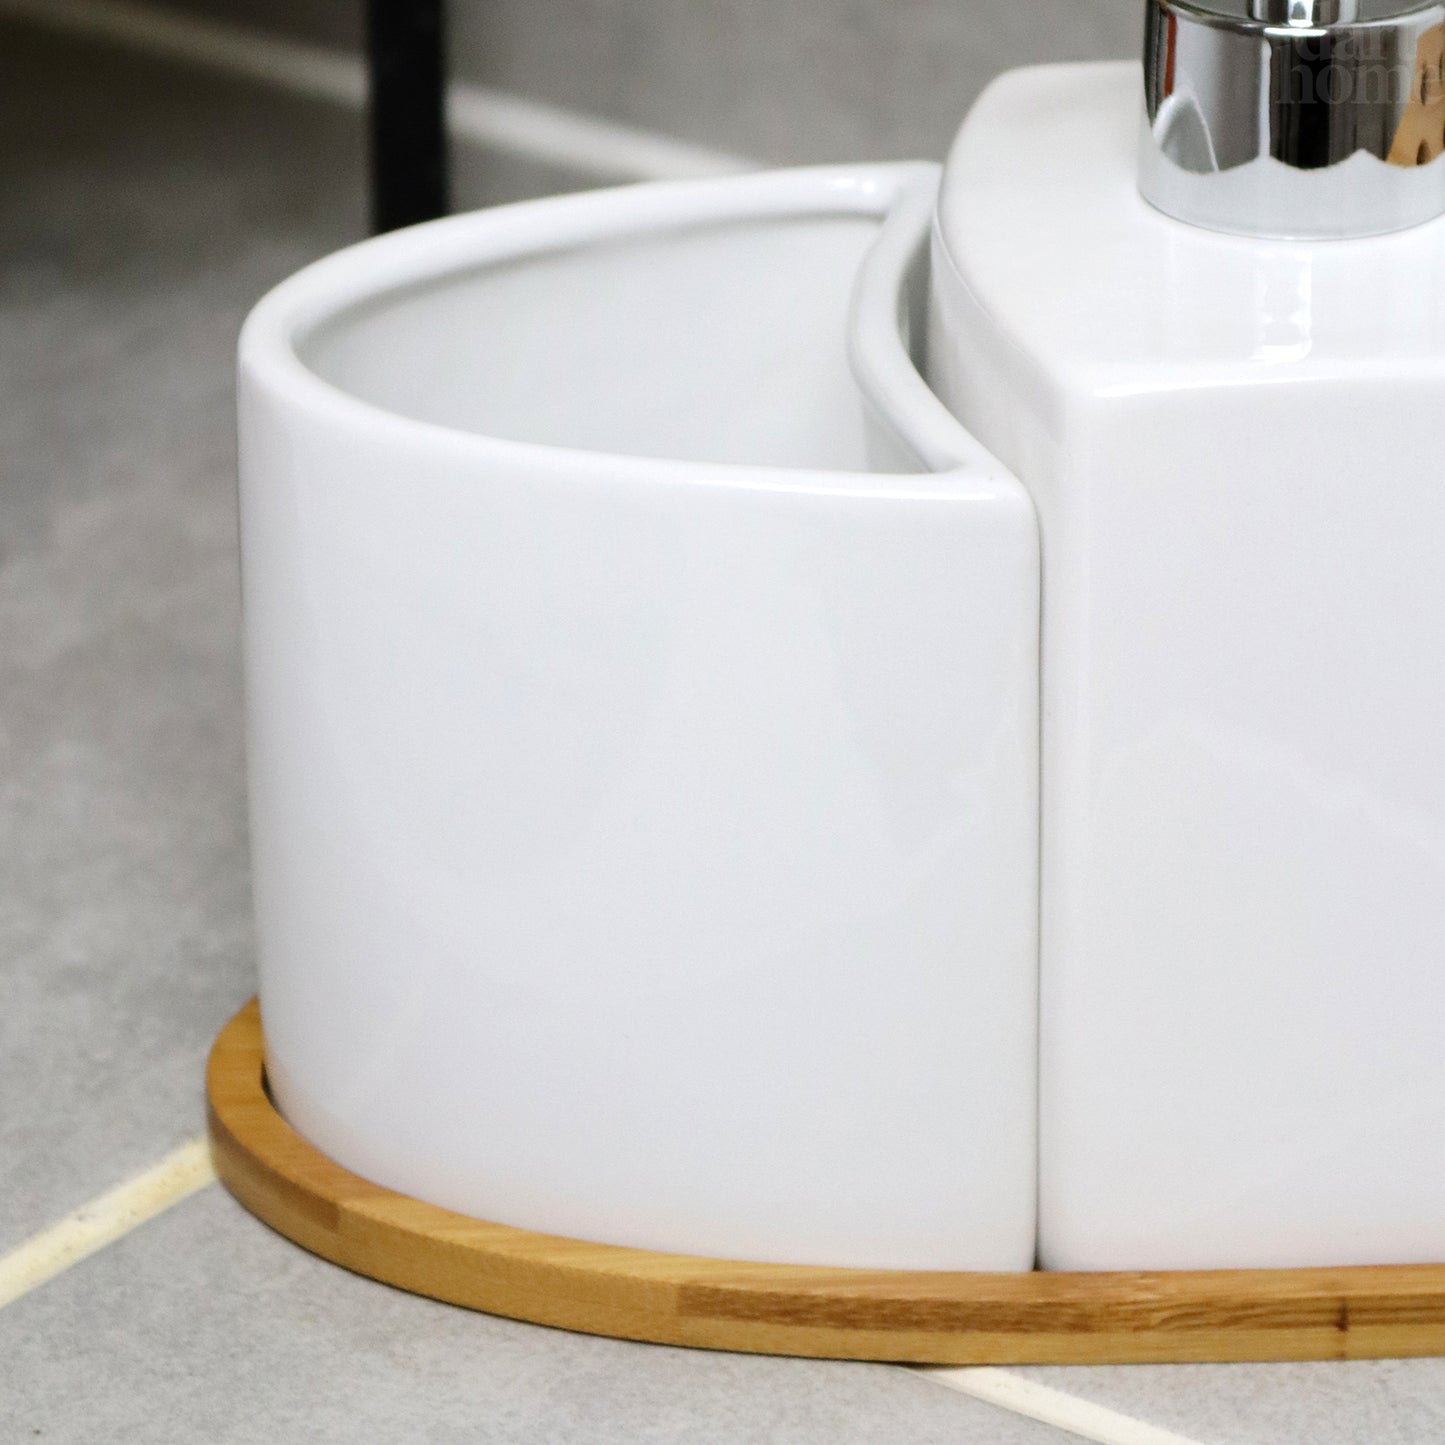 4 Piece White Ceramic And Bamboo Bathroom Set